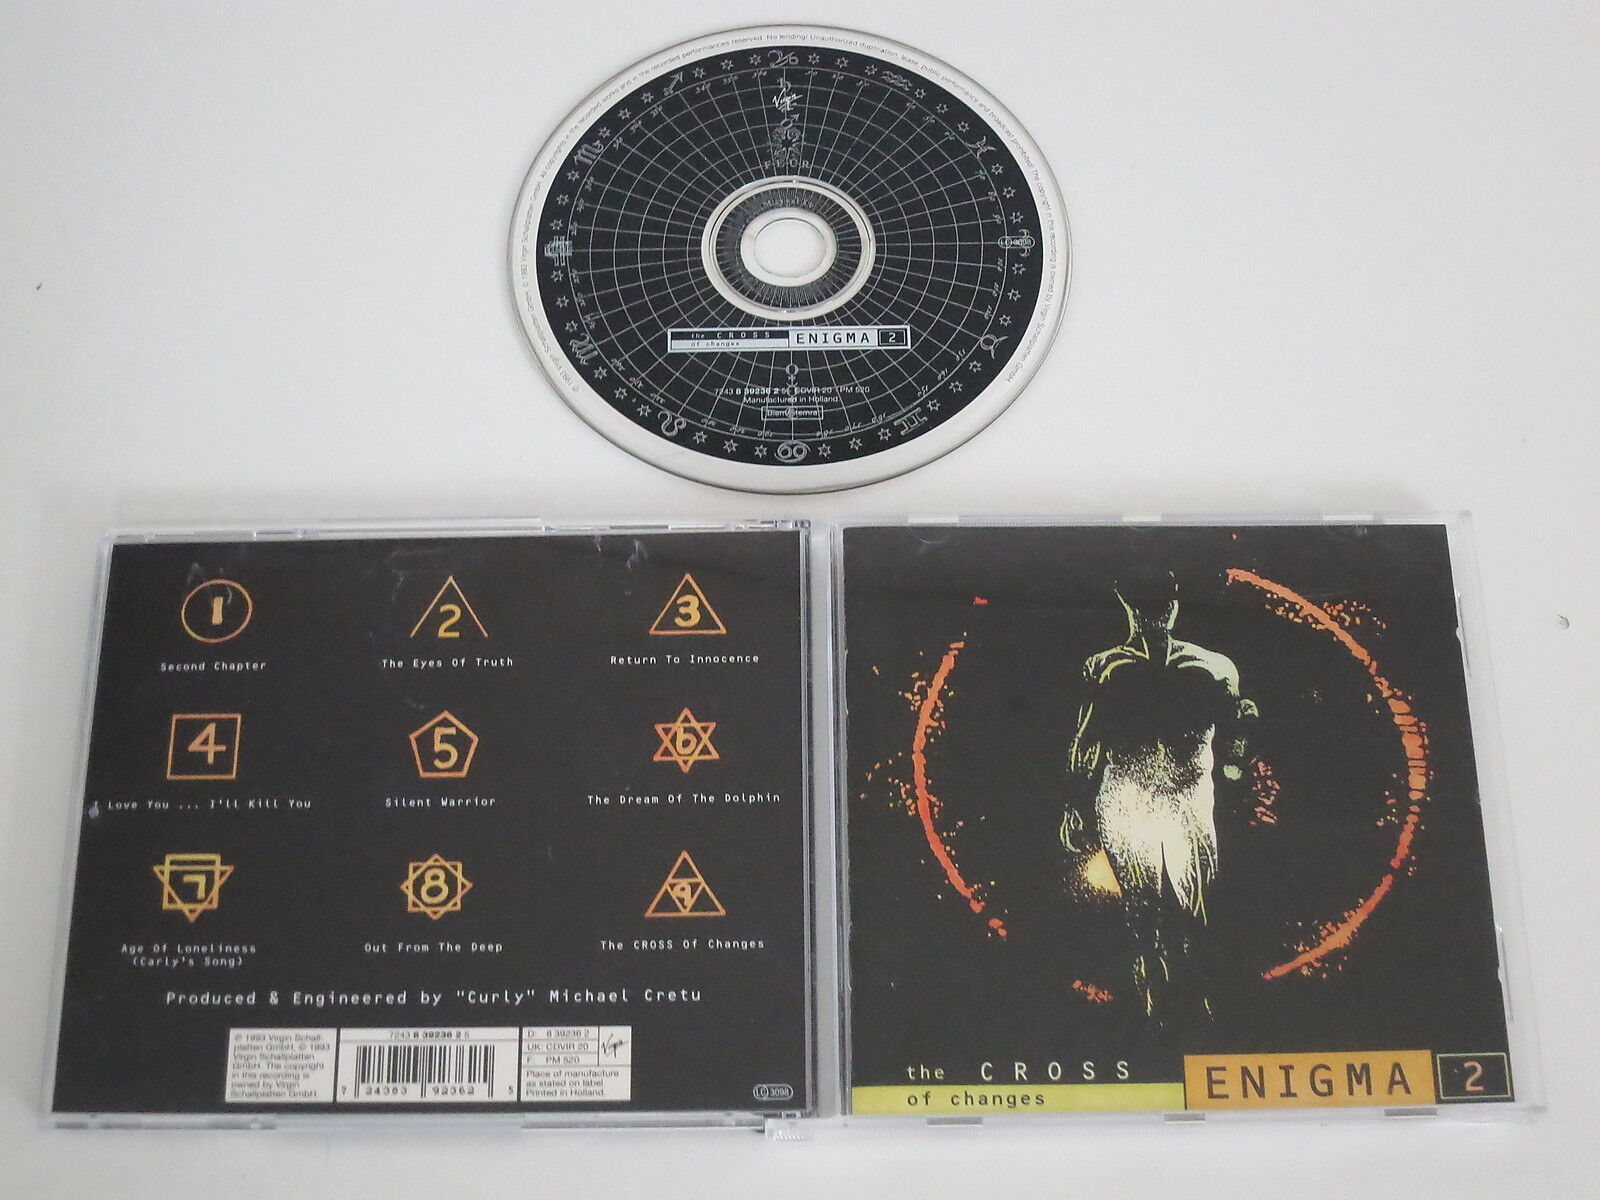 Enigma/2 the Cross Of Changes (7243 8 39236 2 5)CD Album | eBay